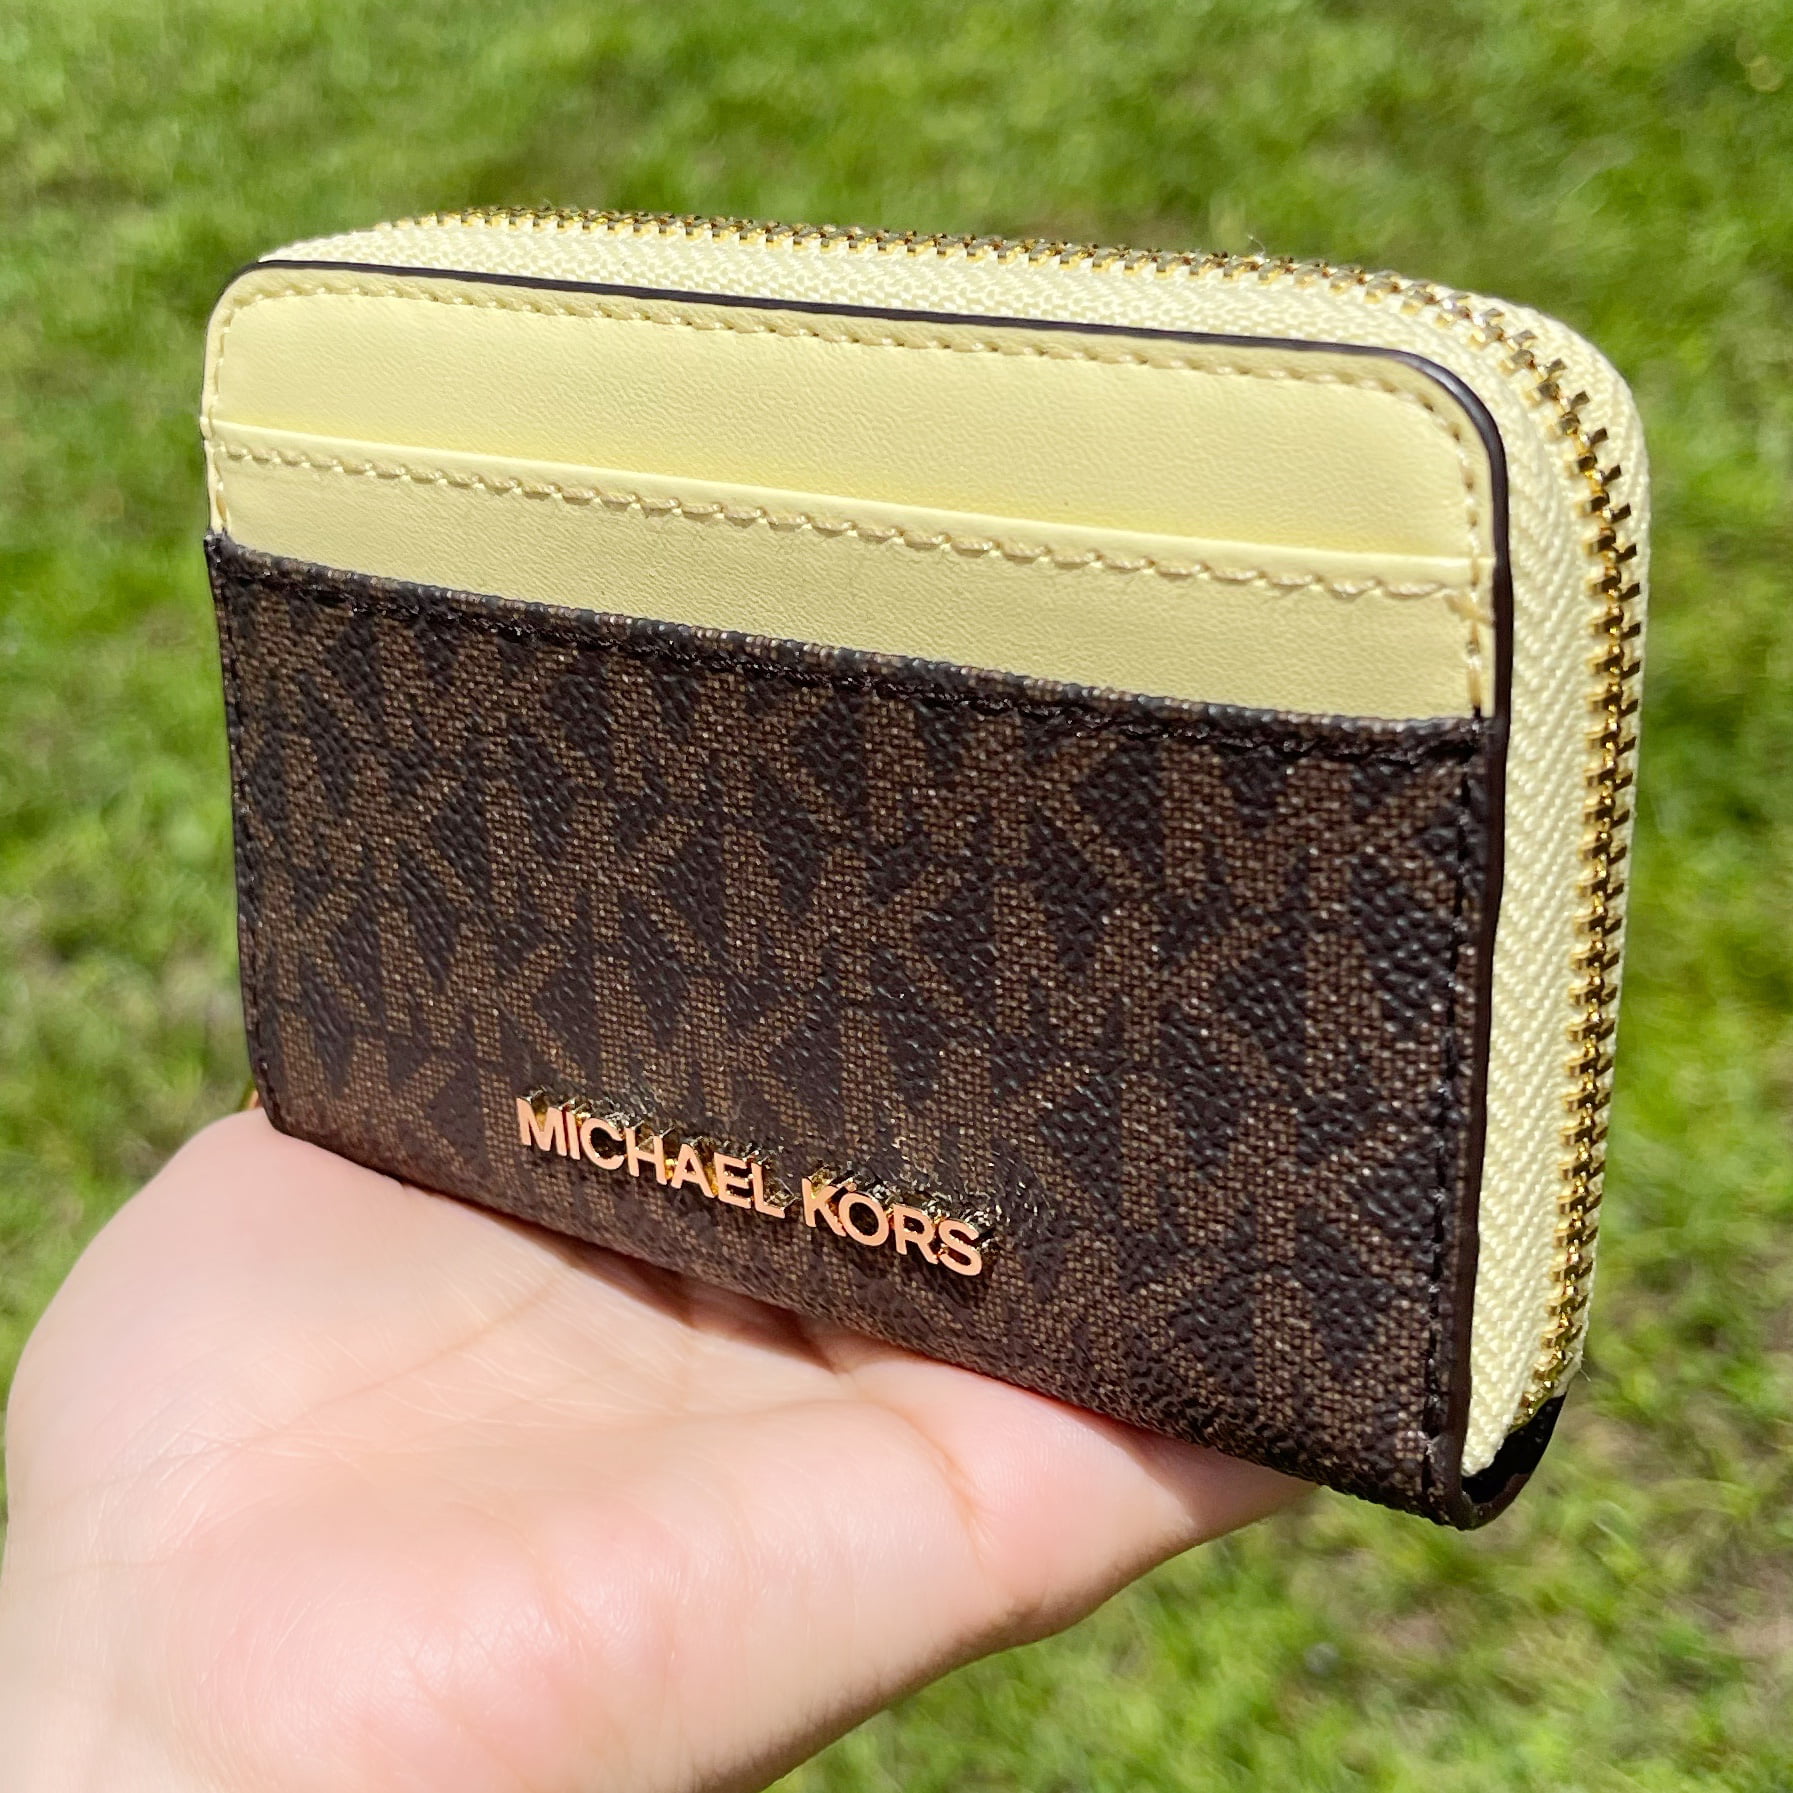 michael kors wallet inside